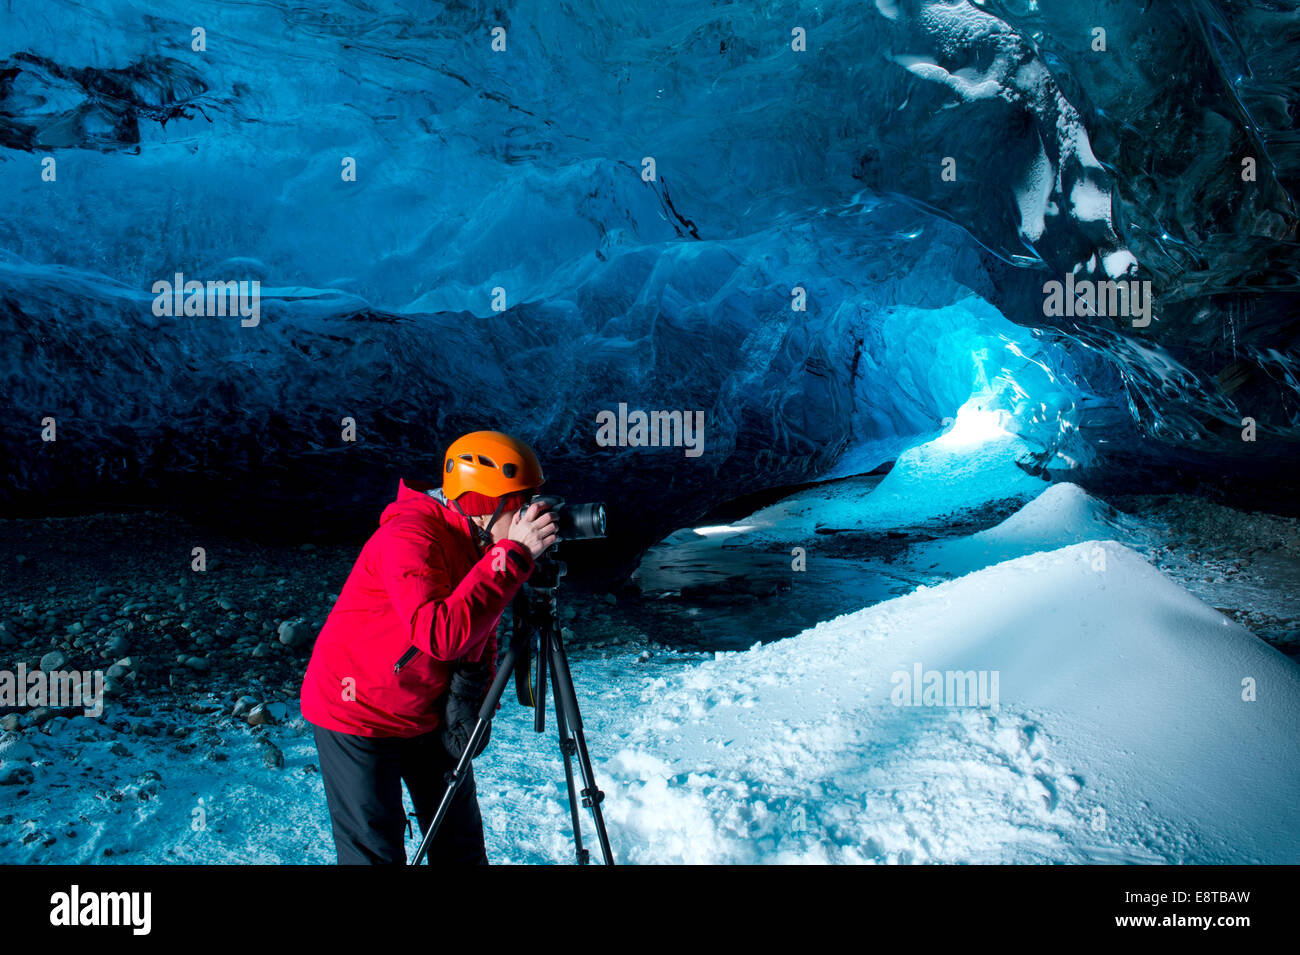 Fotografen nehmen Foto in Eishöhle Stockfoto